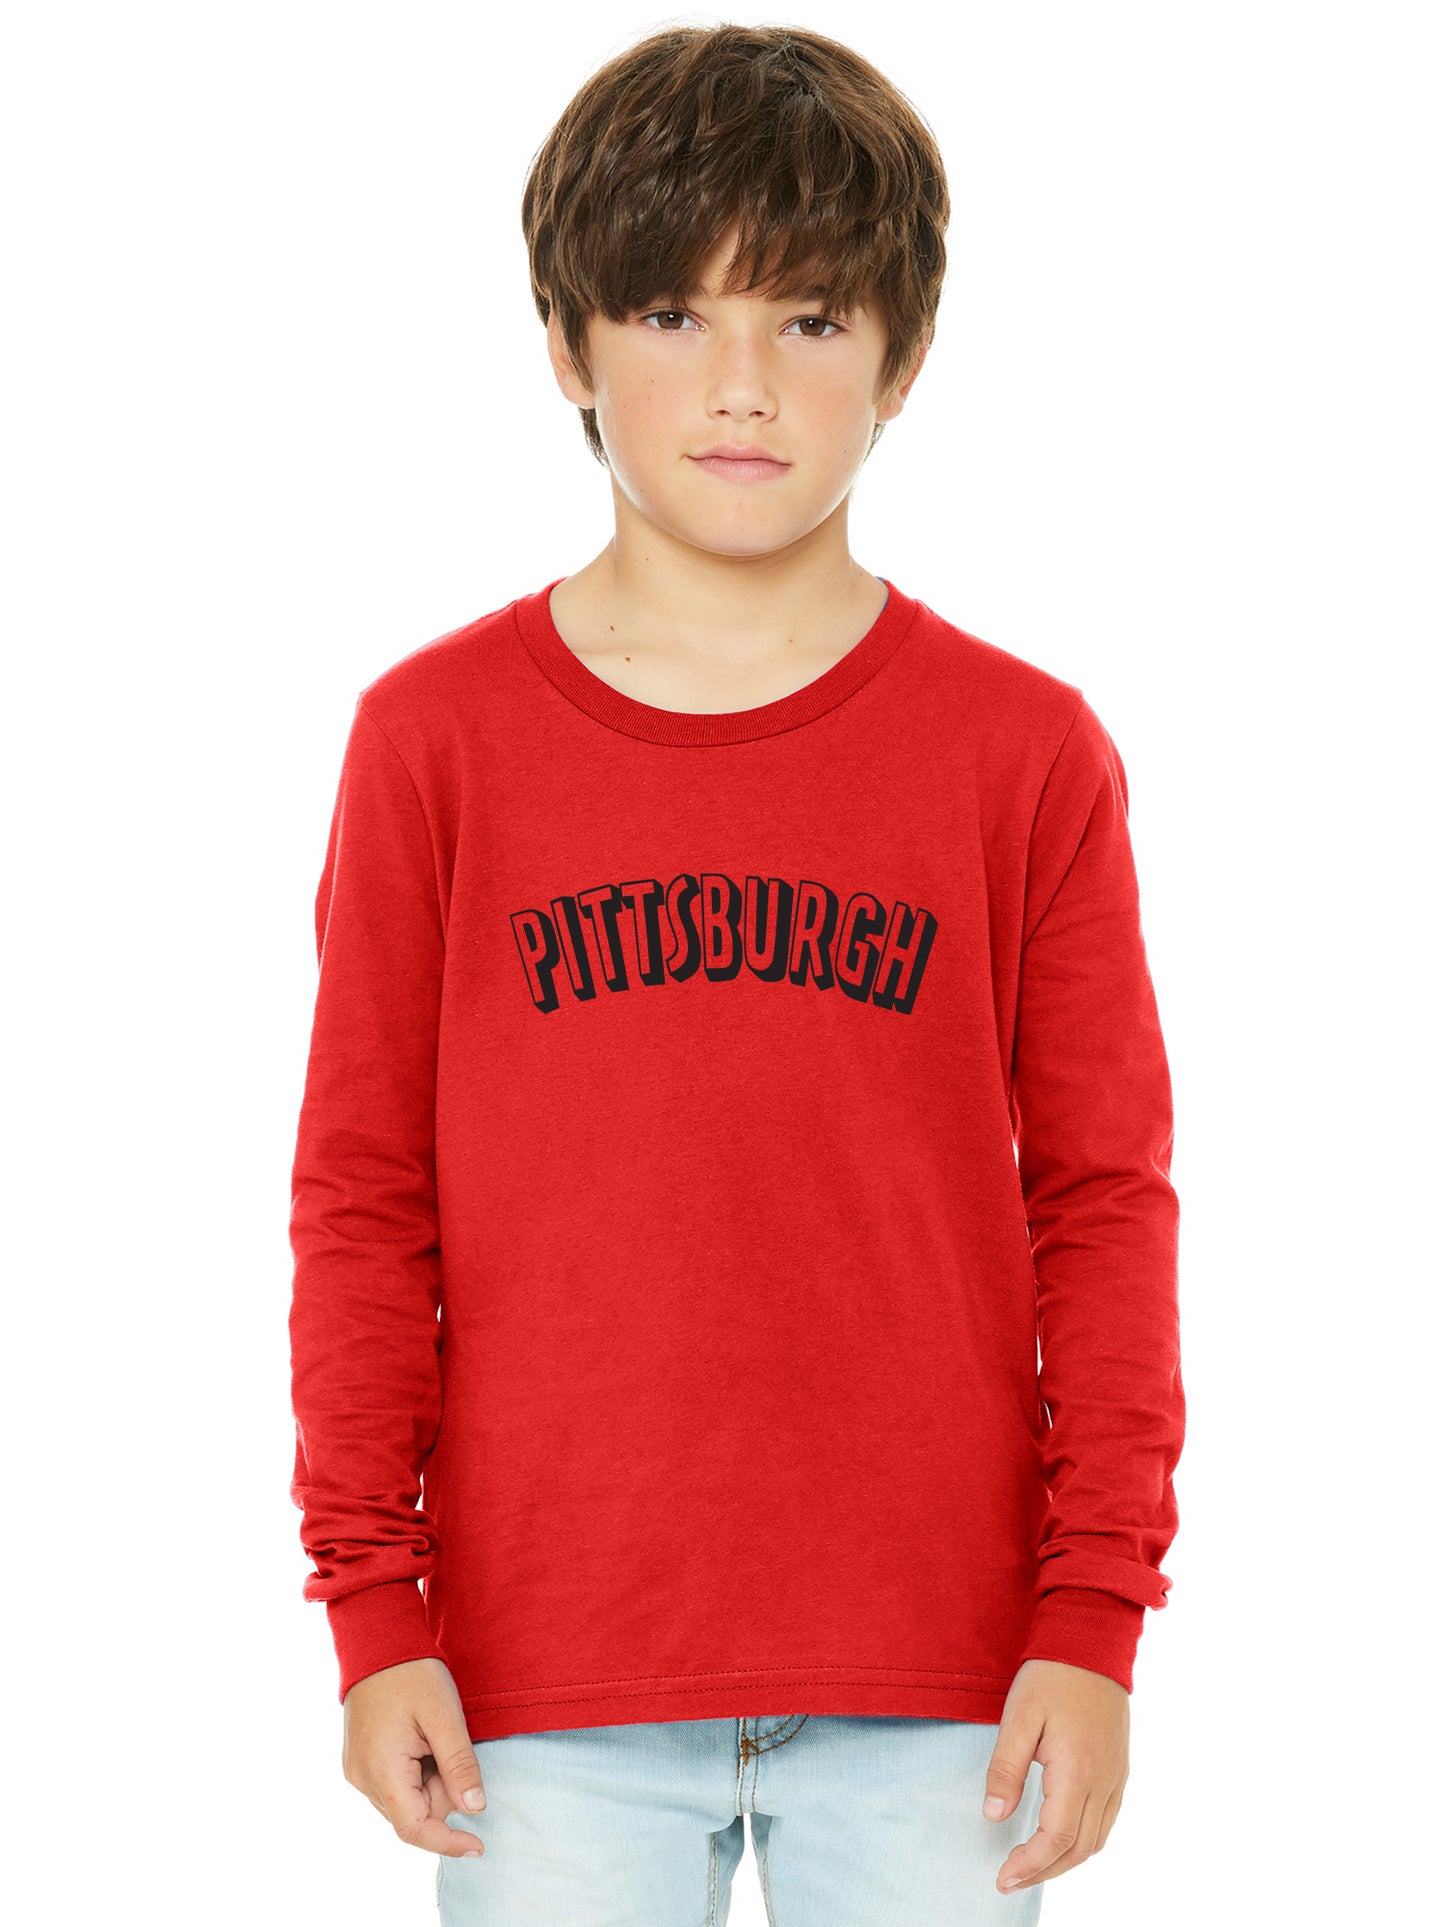 Daxton Youth Long Sleeve Pittsburgh Basic Tshirt